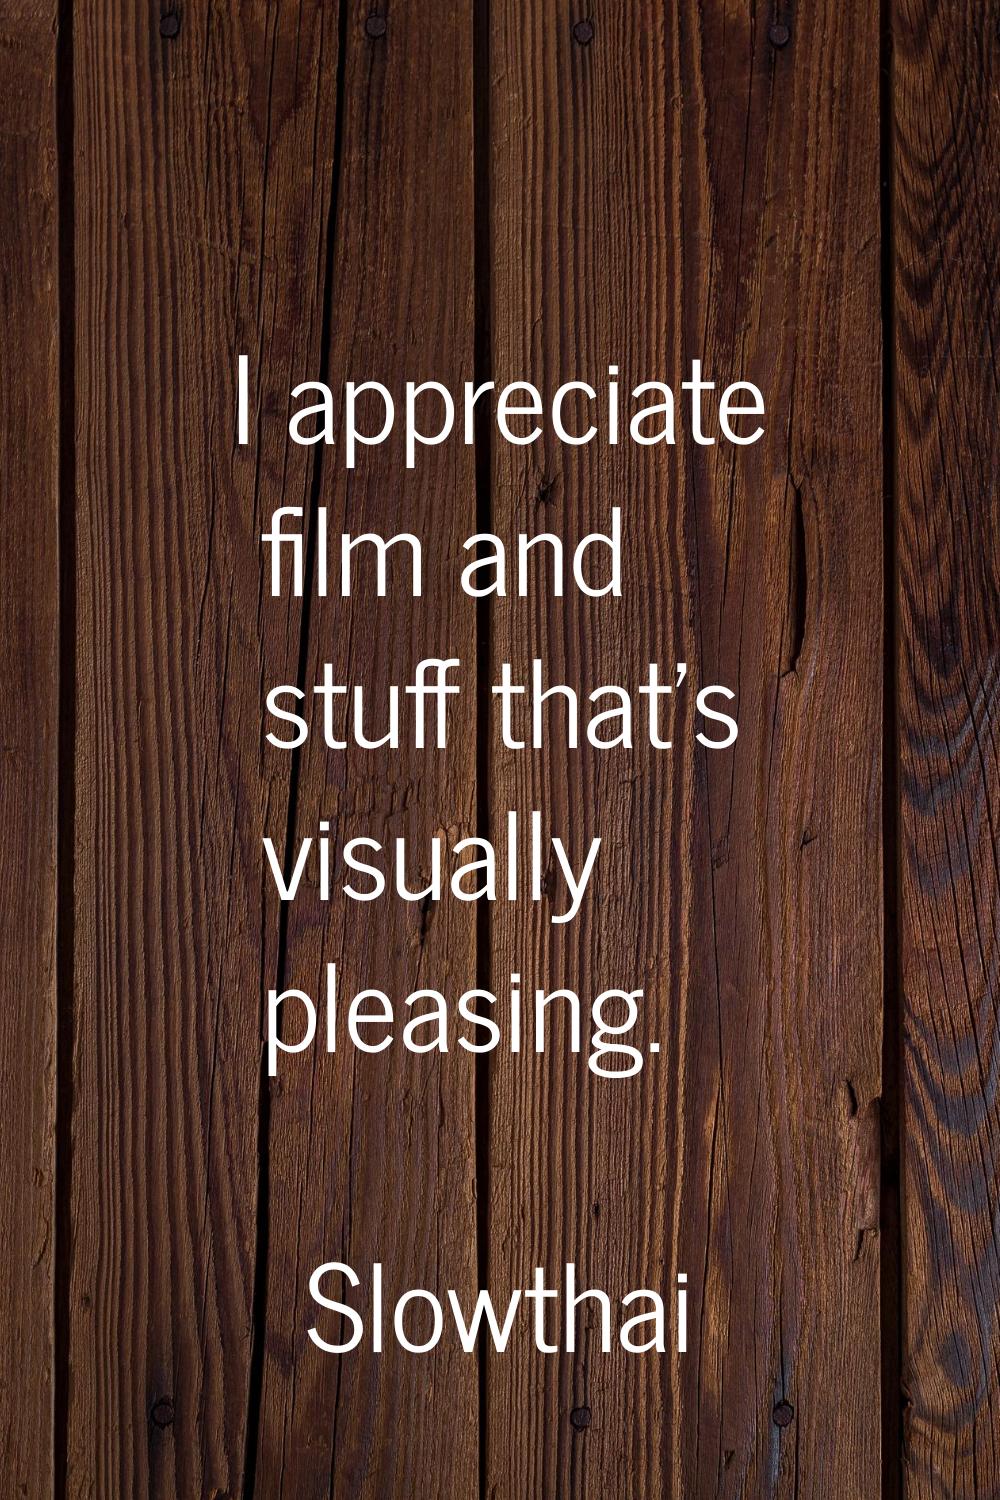 I appreciate film and stuff that's visually pleasing.